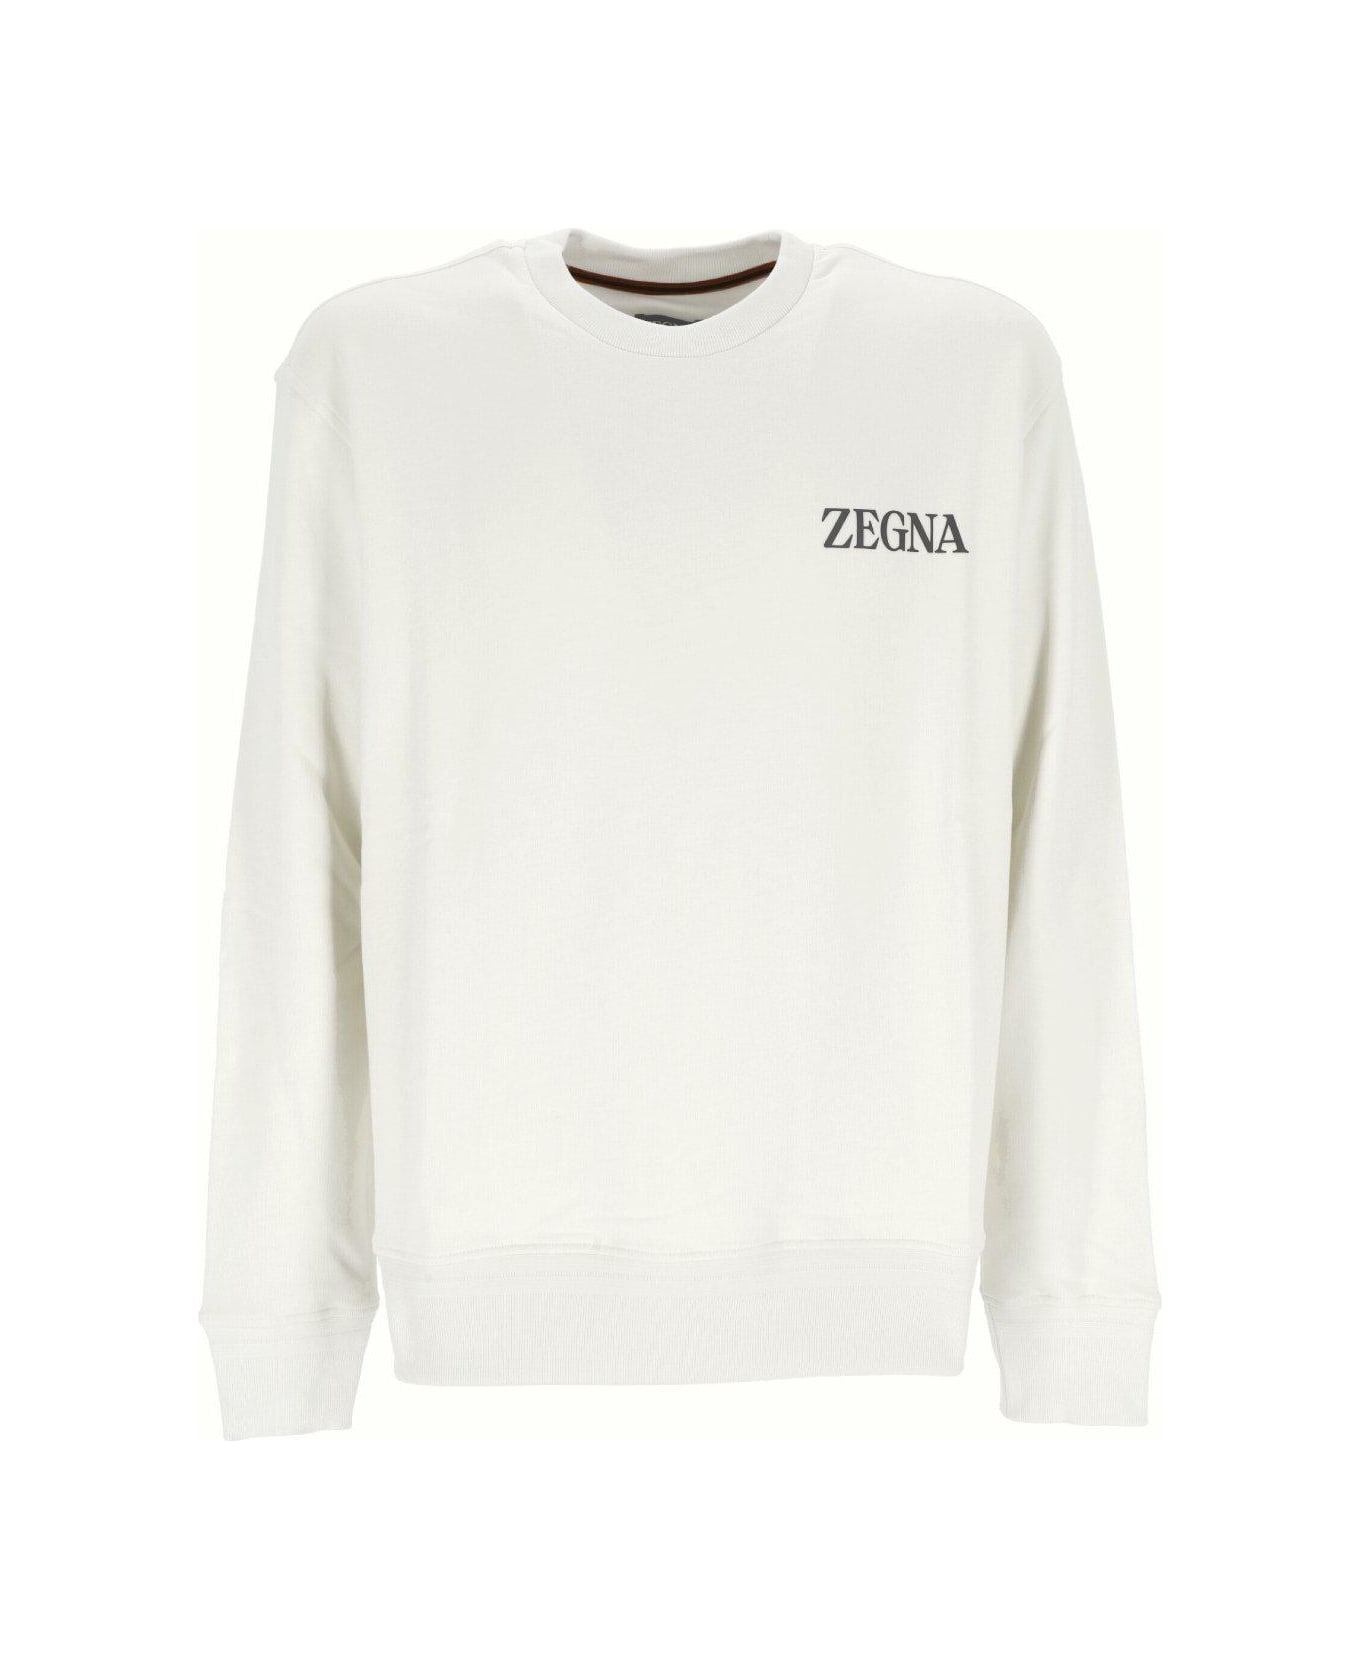 Zegna Logo Prrinted Crewneck Sweatshirt